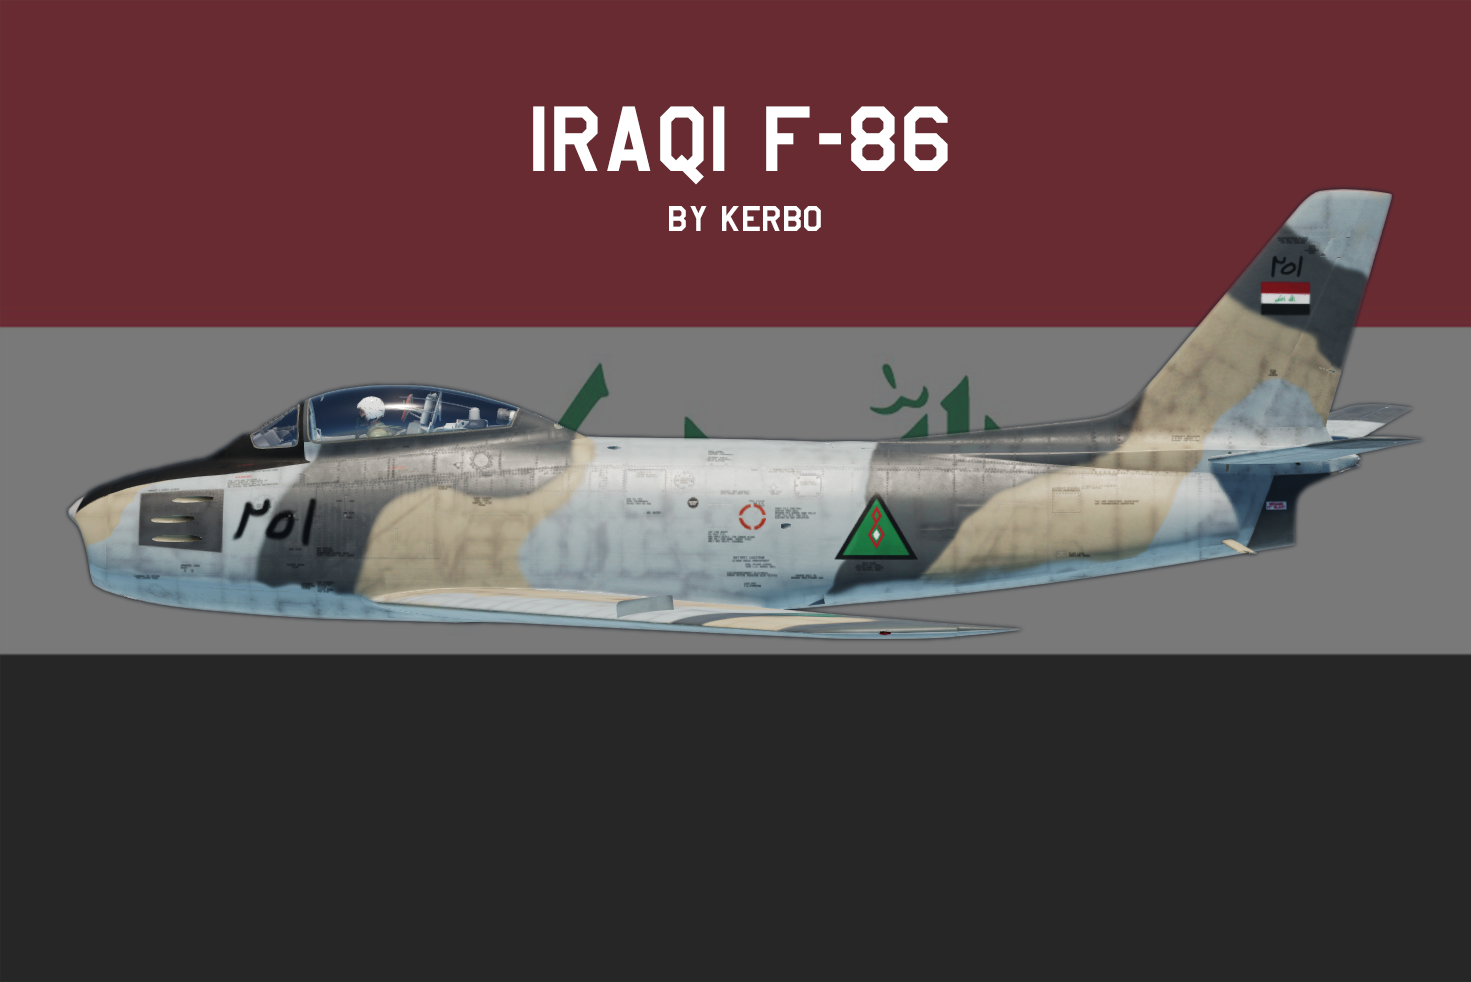 Fictional Iraqi F-86 